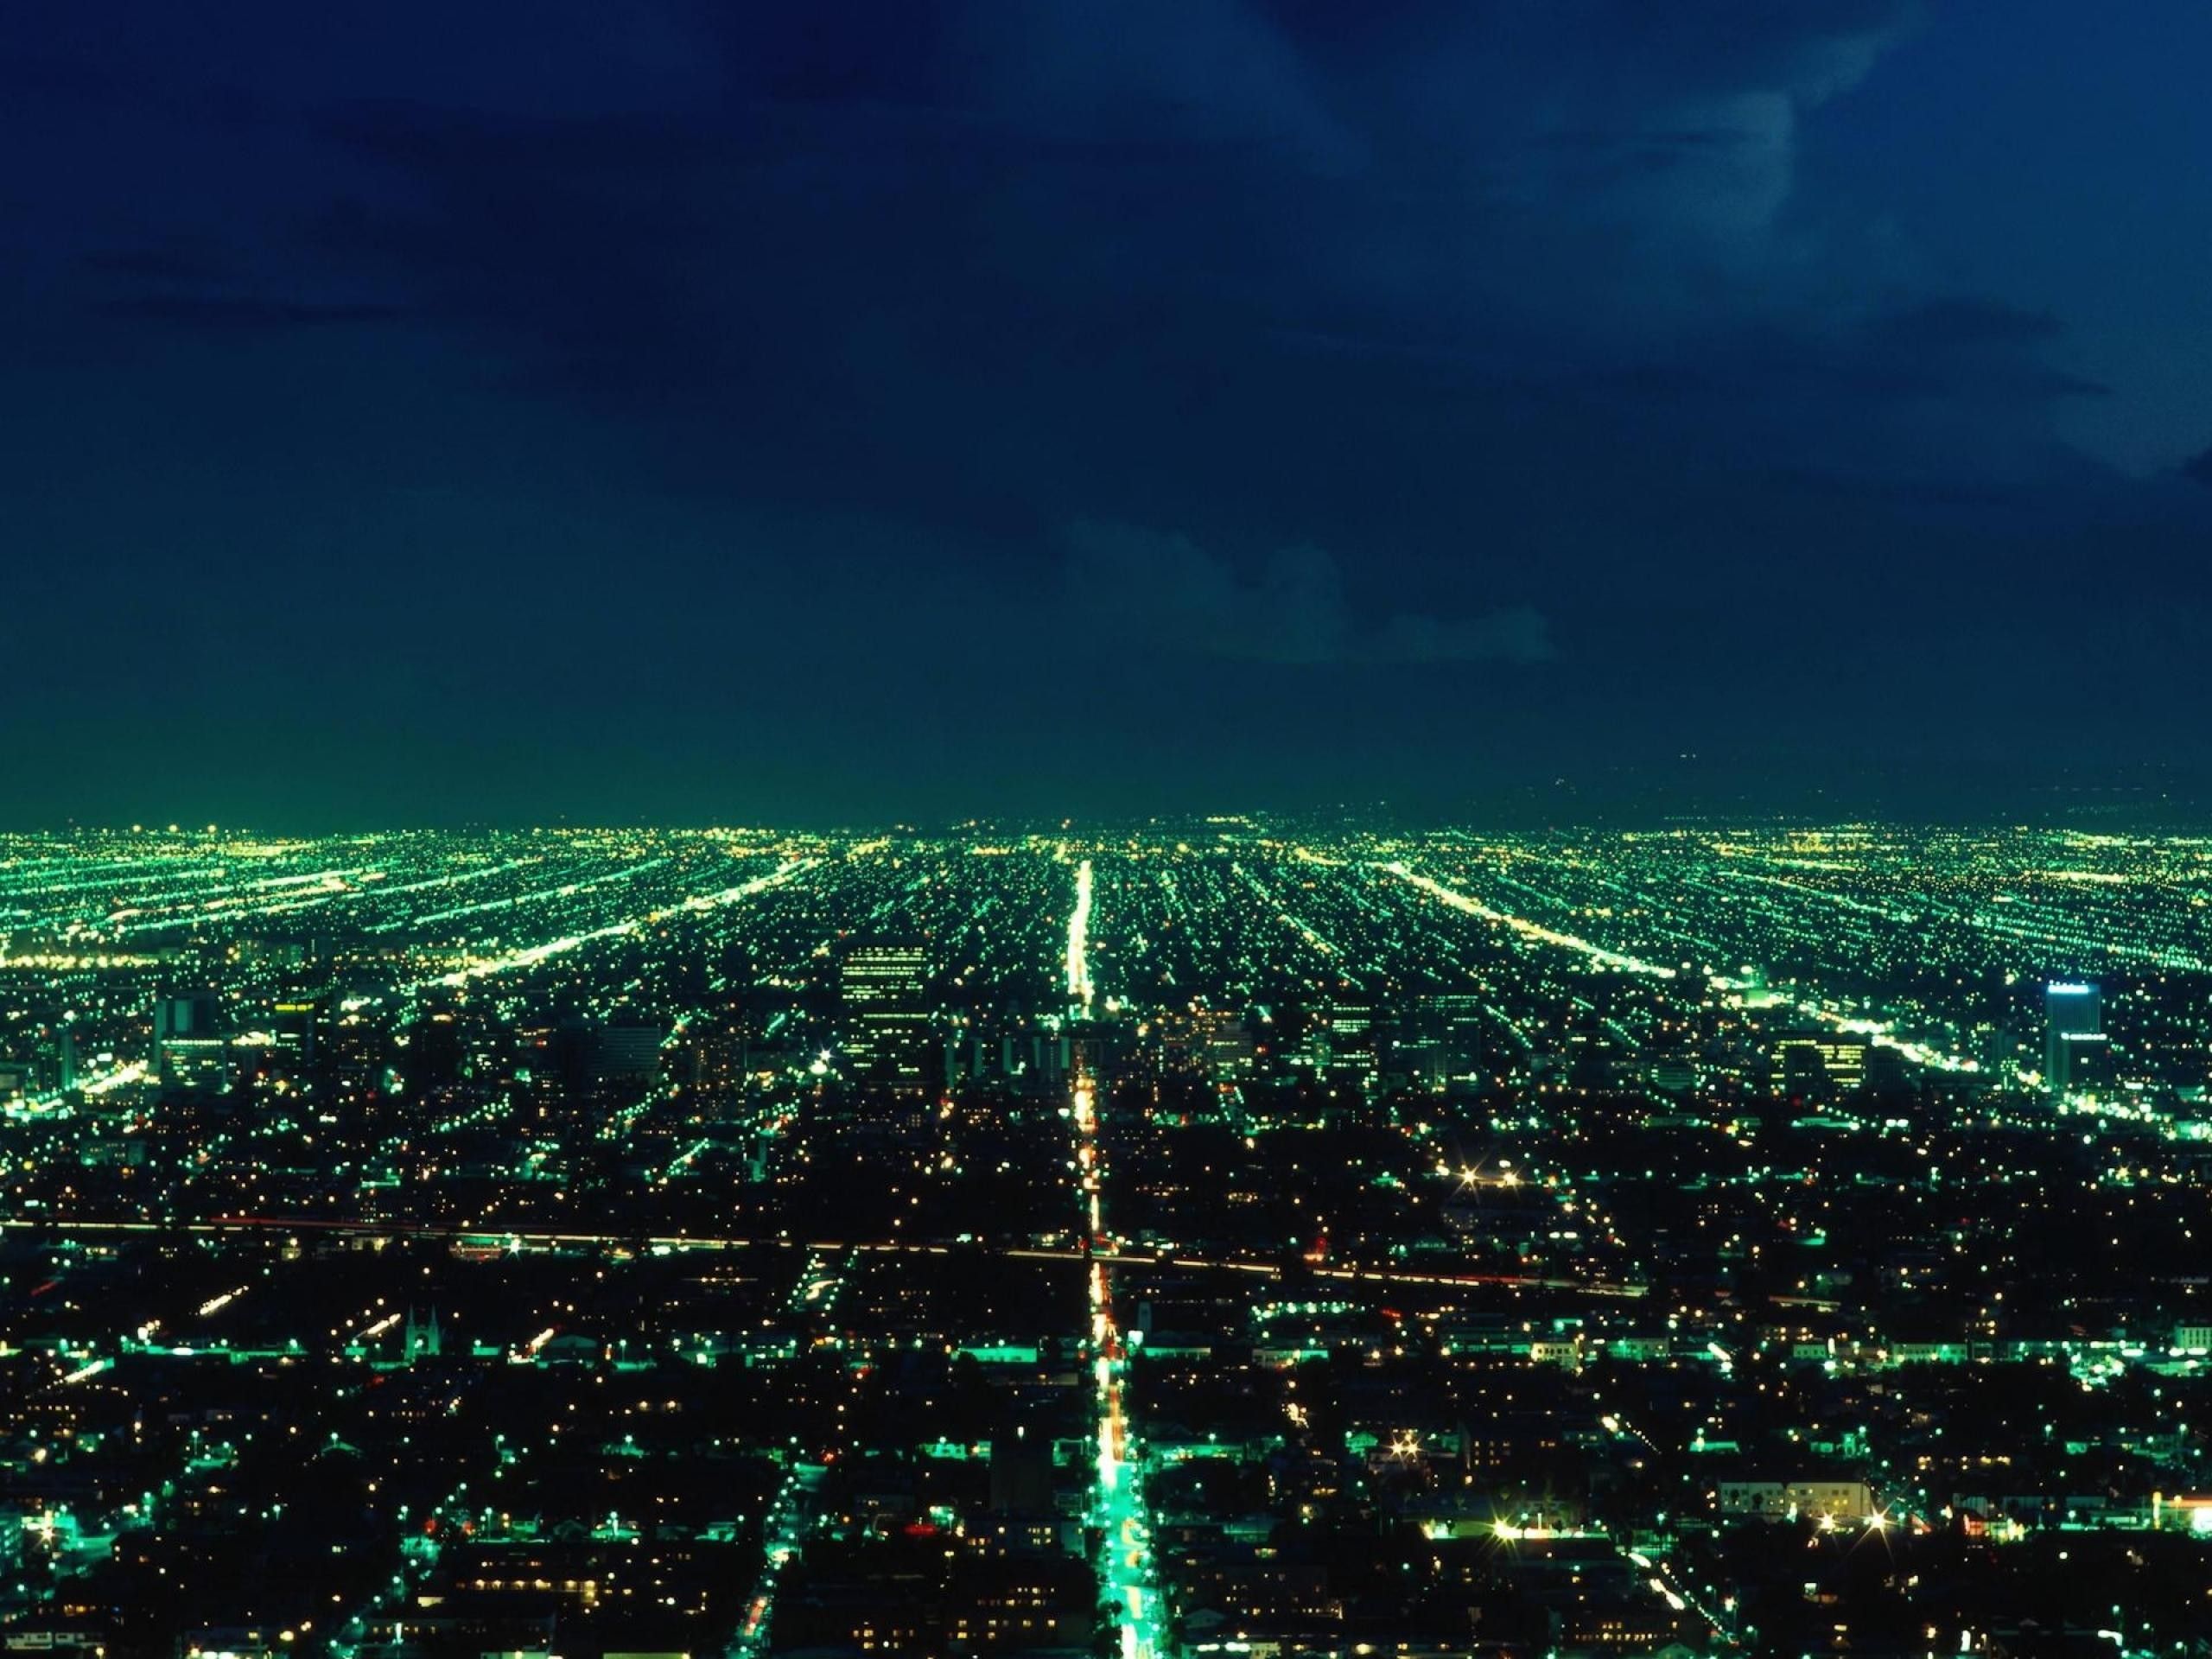 City Skyline at Night wallpaper. City wallpaper, Night city, Landscape photography